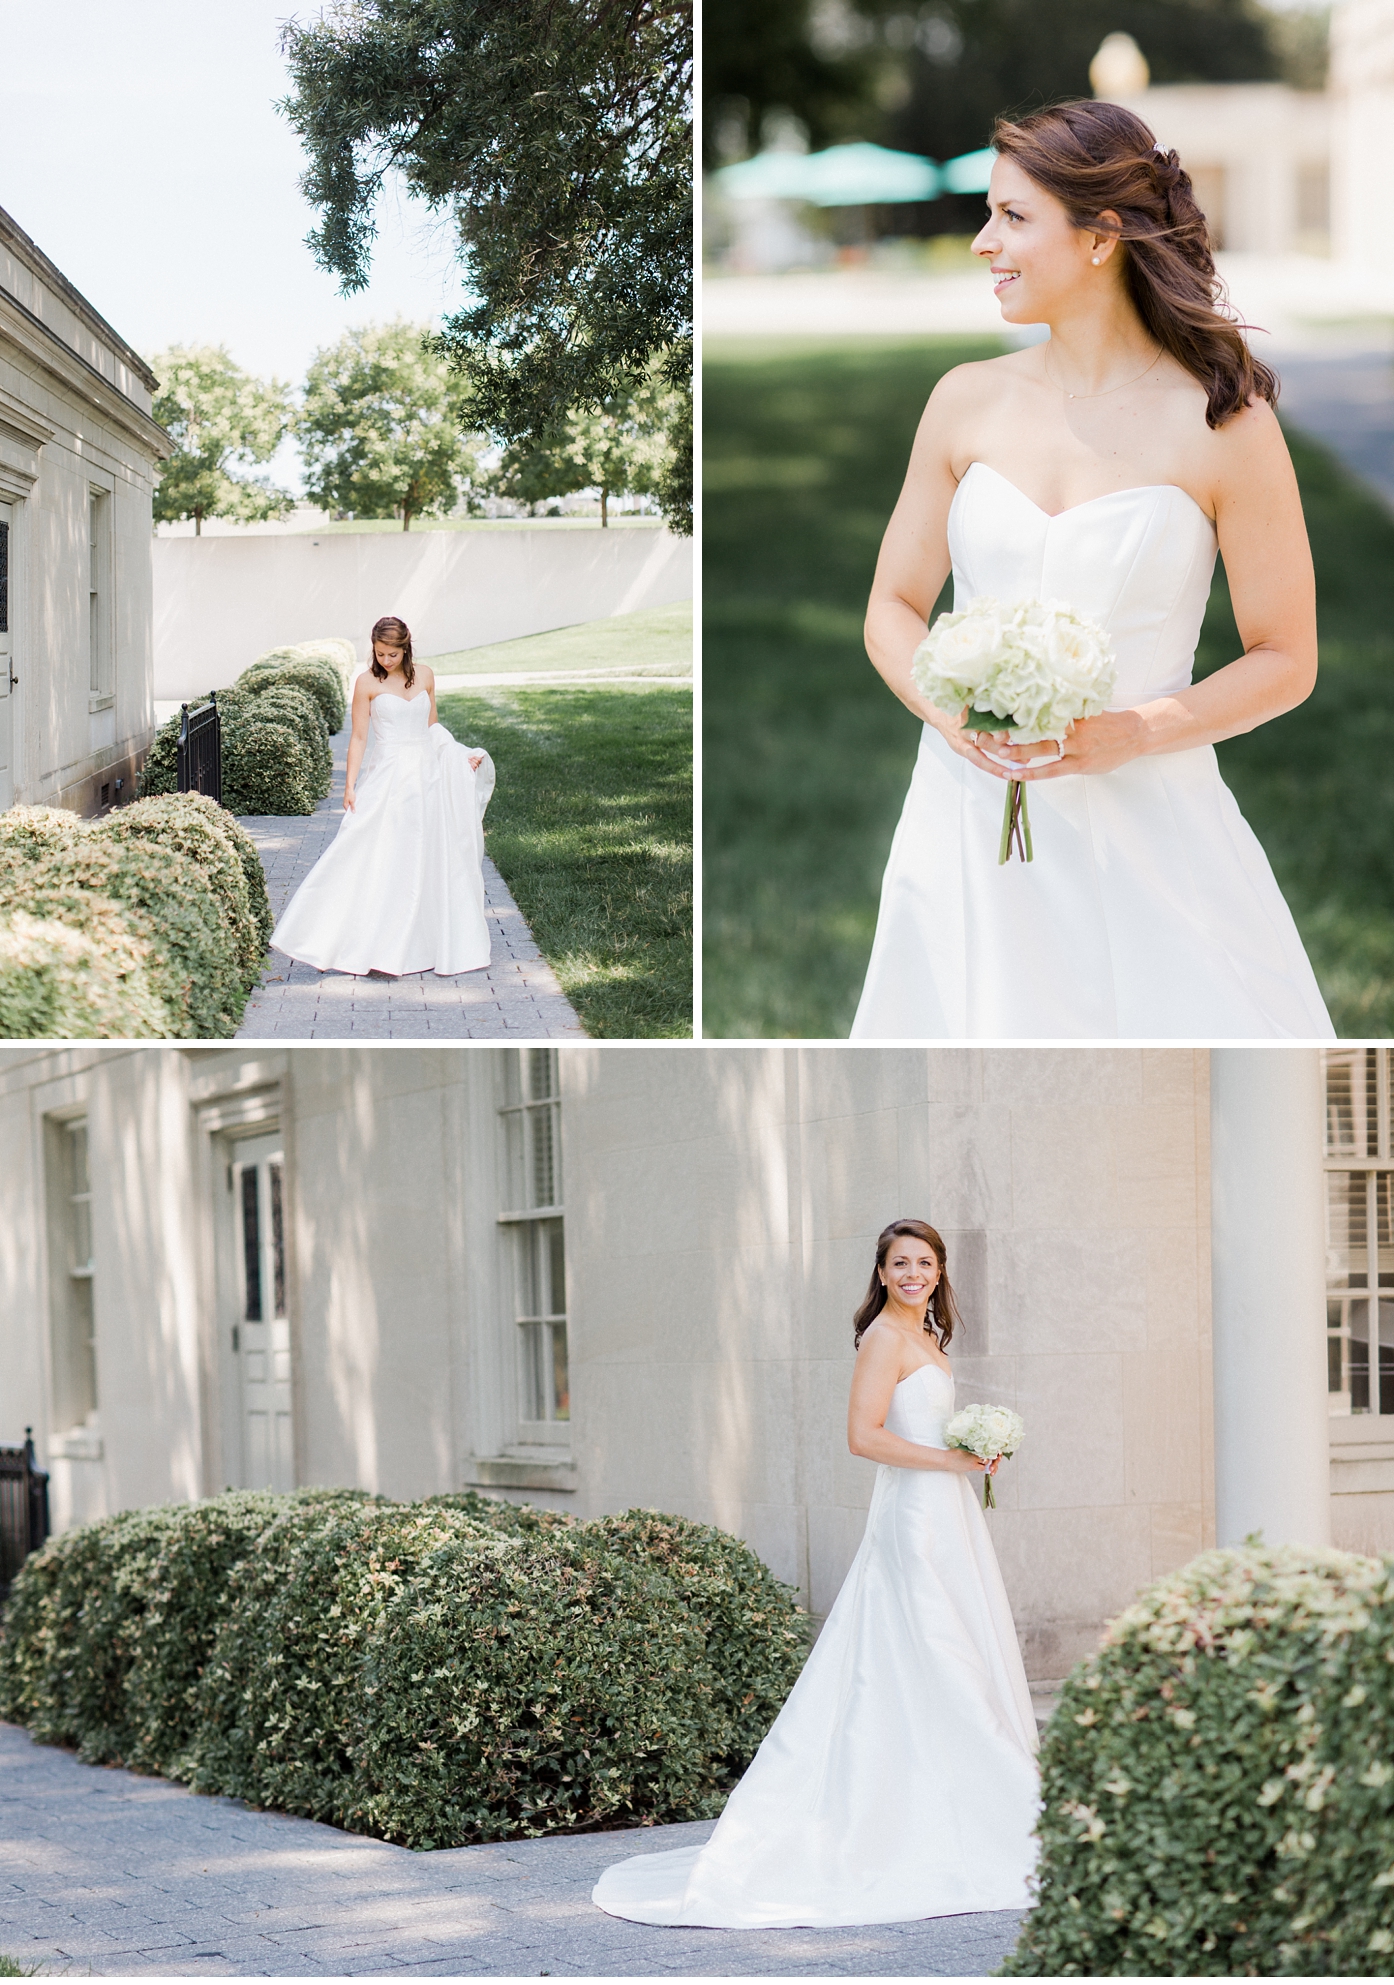 VMFA Bridal Portraits in Richmond, VA by Alisandra Photography